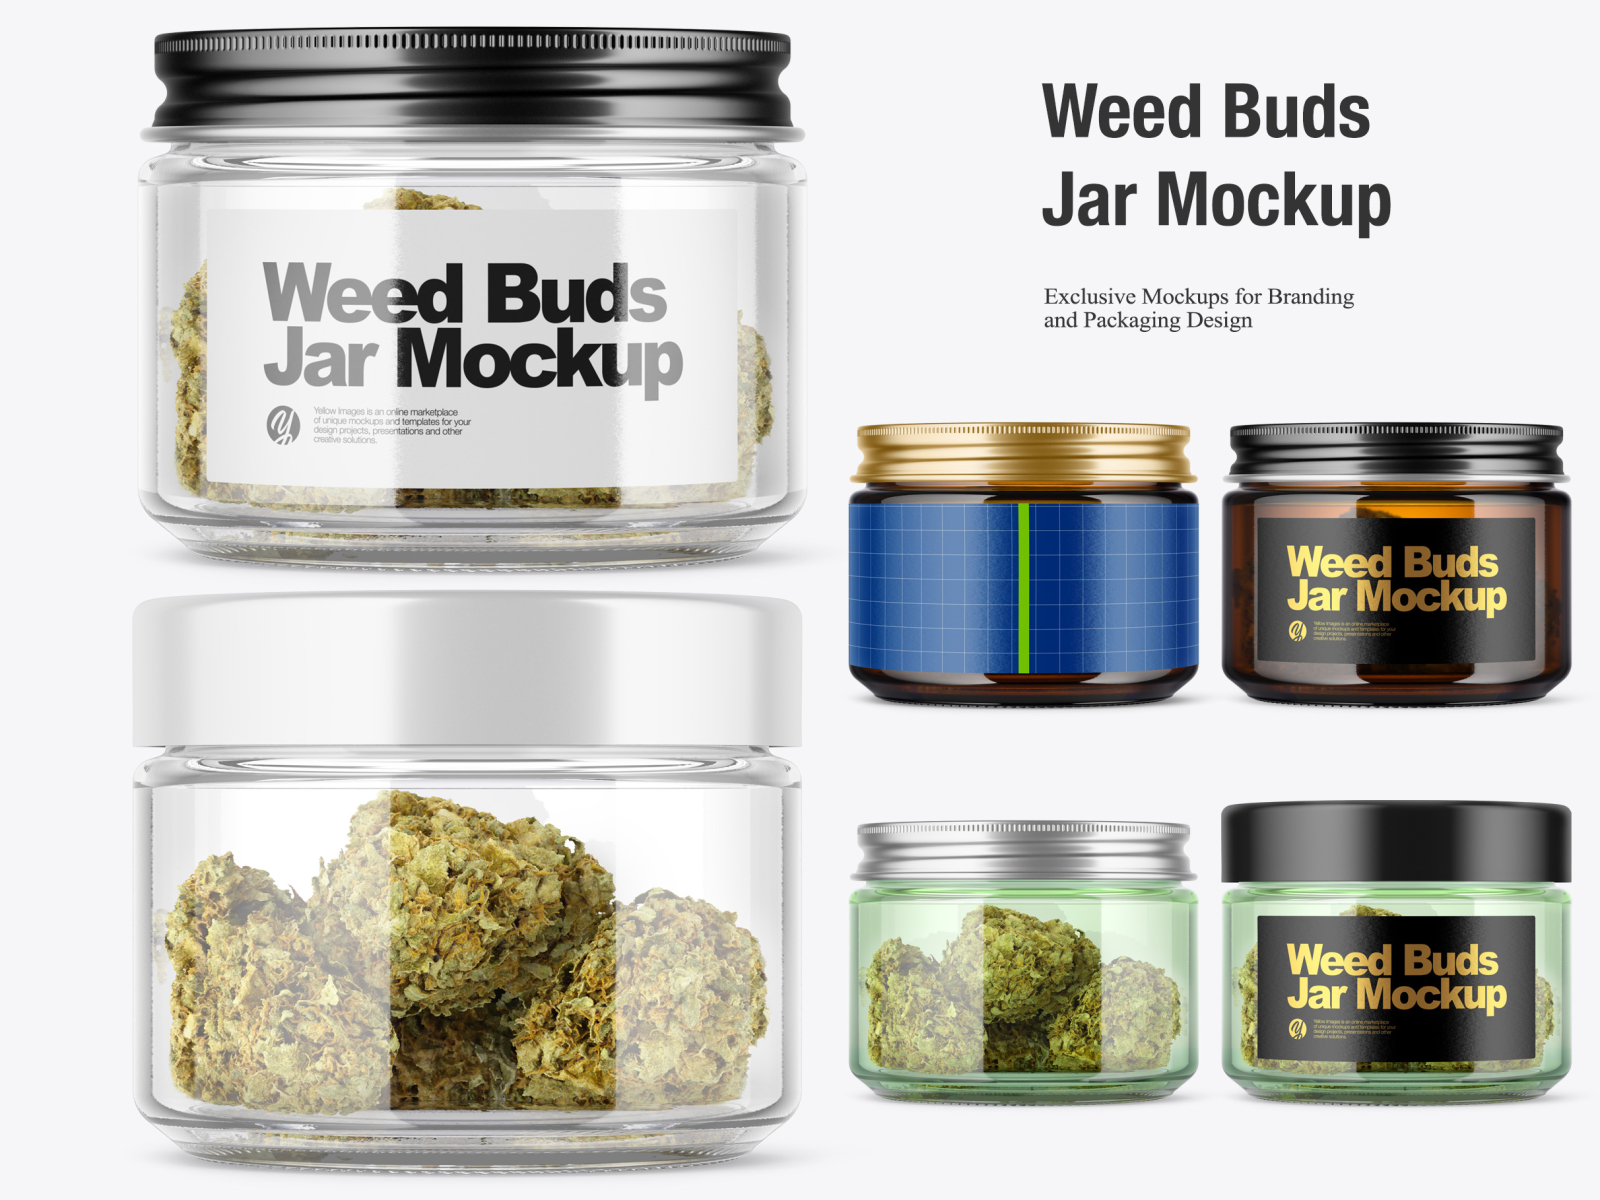 Weed Buds Jar Mockup By Oleksandr Hlubokyi On Dribbble